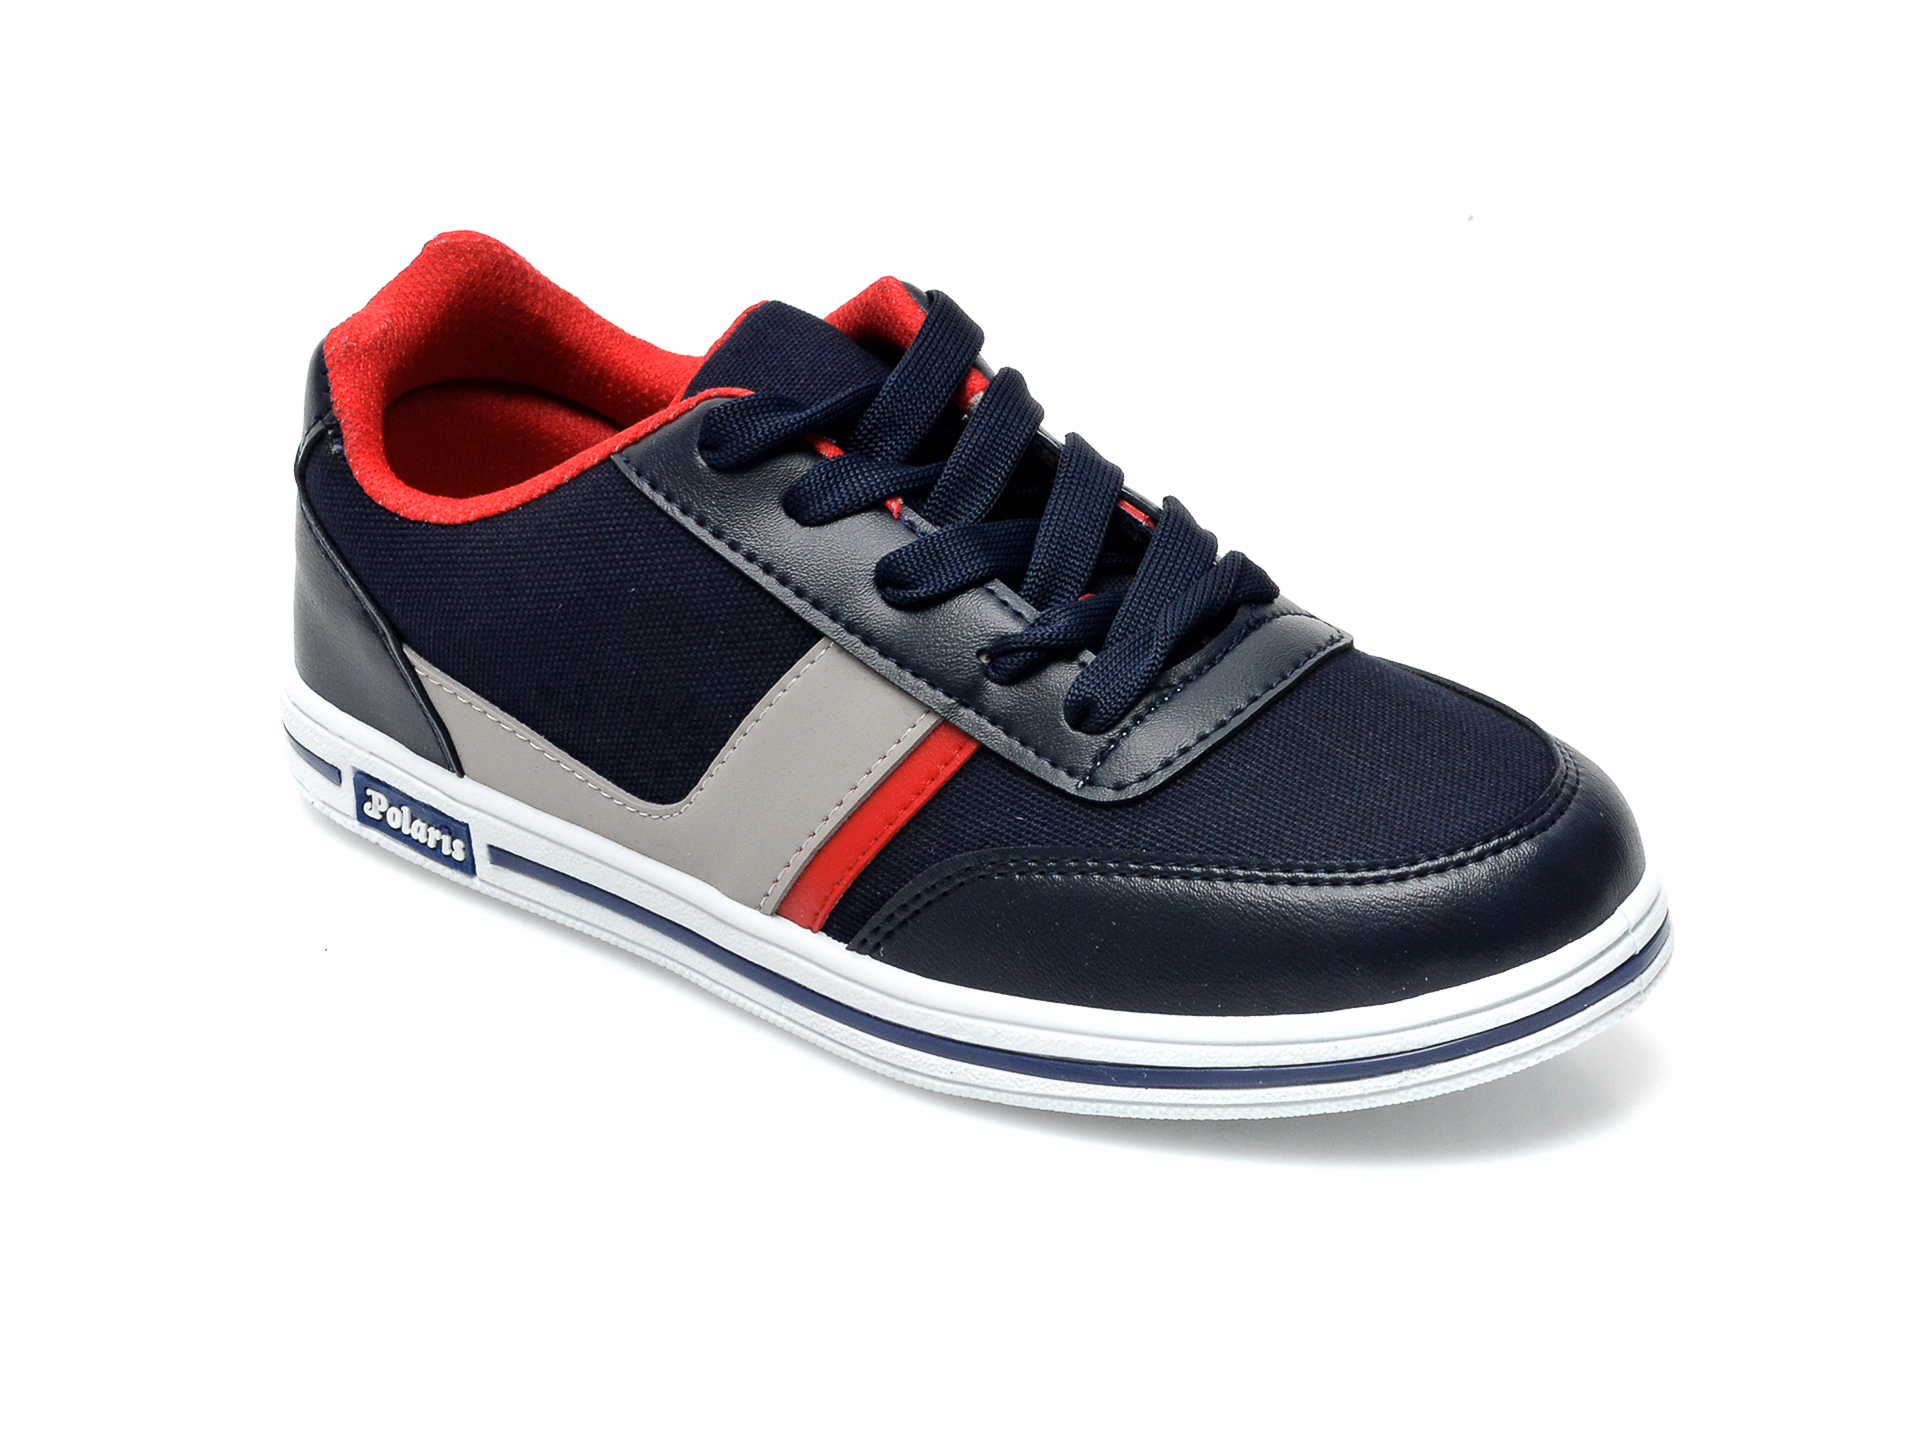 Pantofi sport POLARIS bleumarin, 520121, din material textil si piele ecologica /copii/incaltaminte